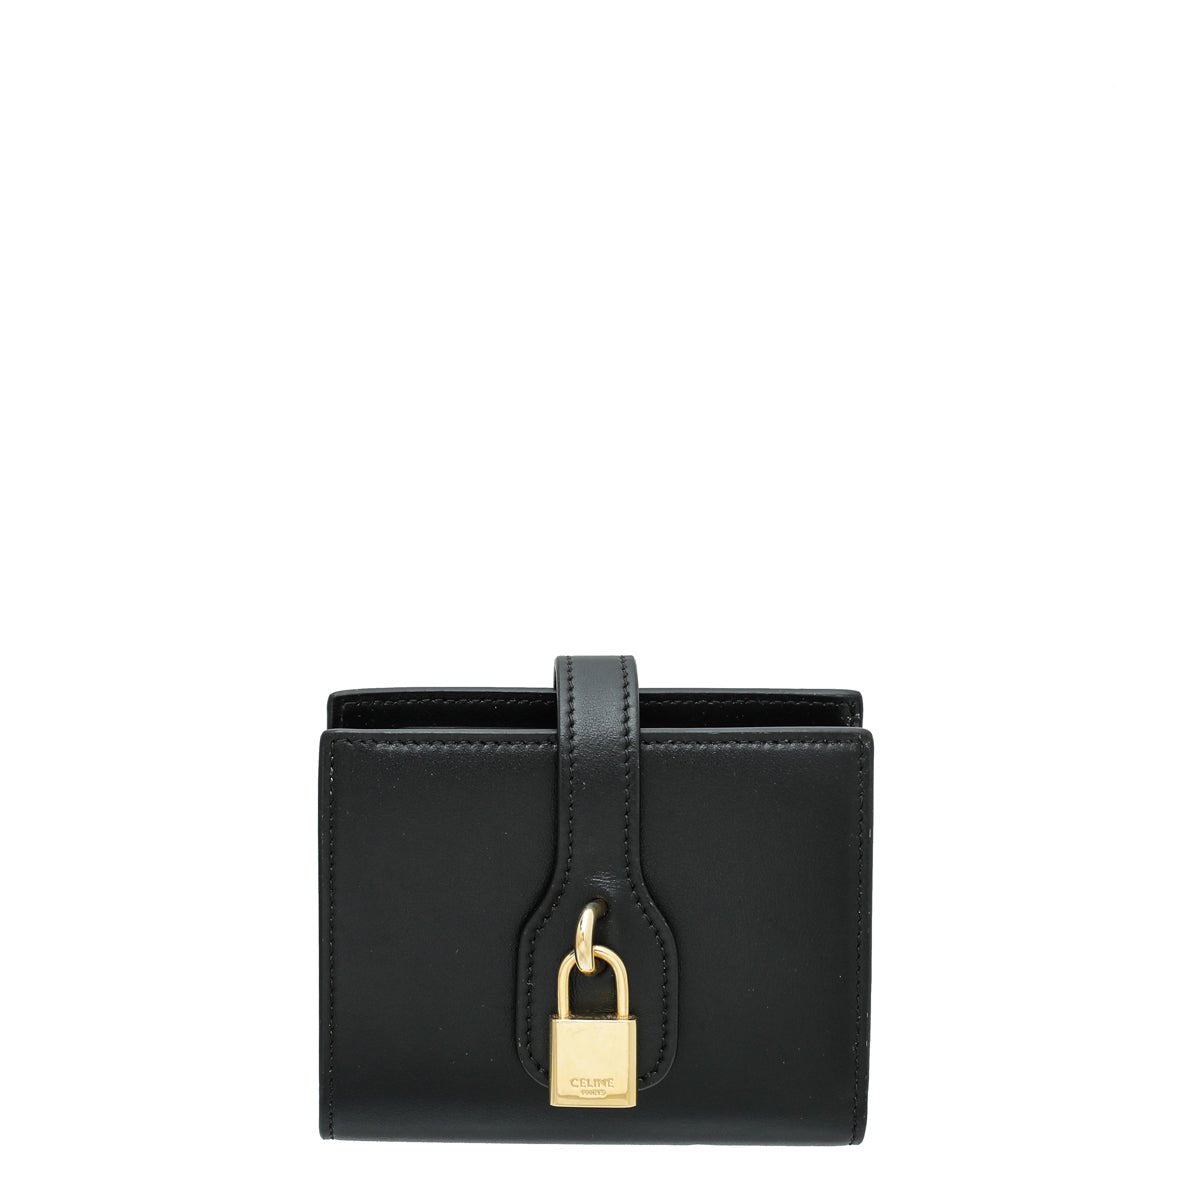 Celine - Celine Black Small Strap Wallet | The Closet